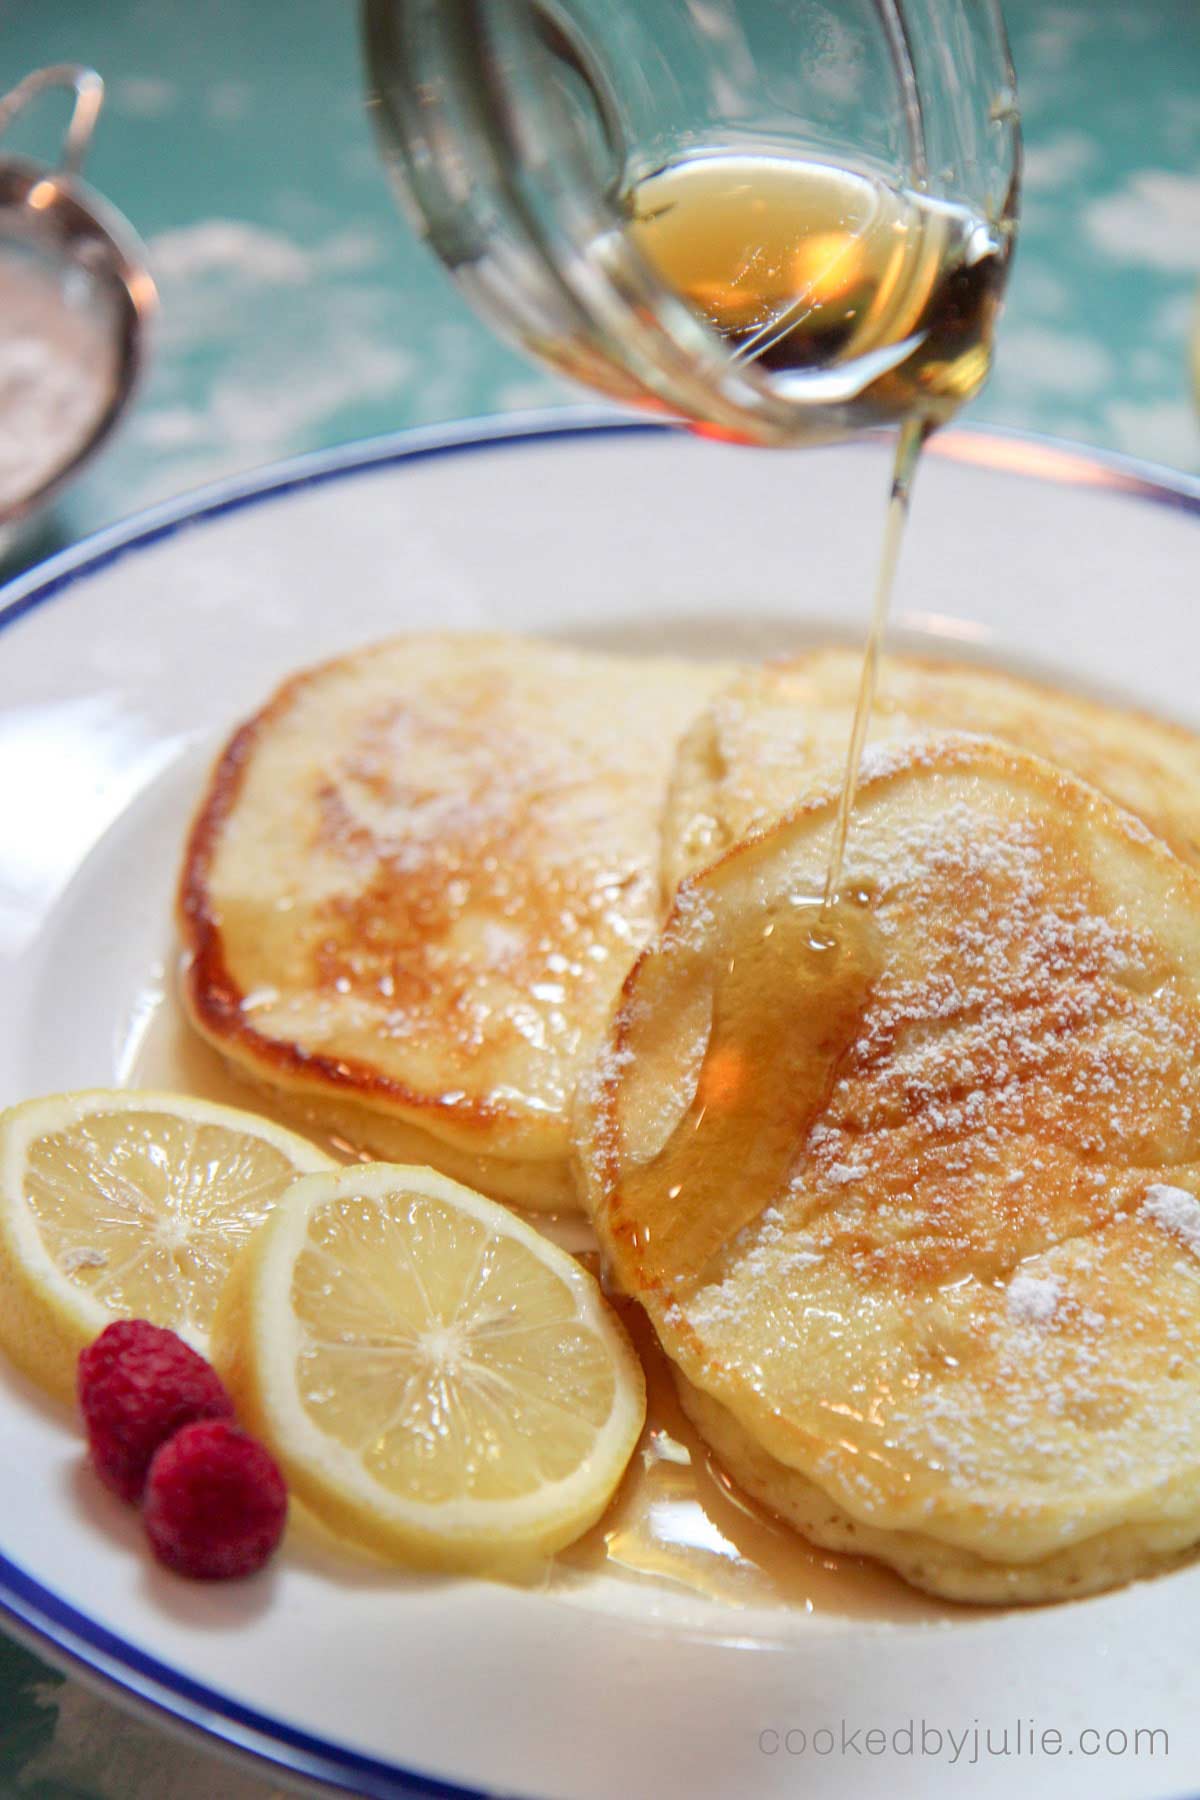 lemon ricotta pancakes with syrup, raspberries, and lemon slices. 